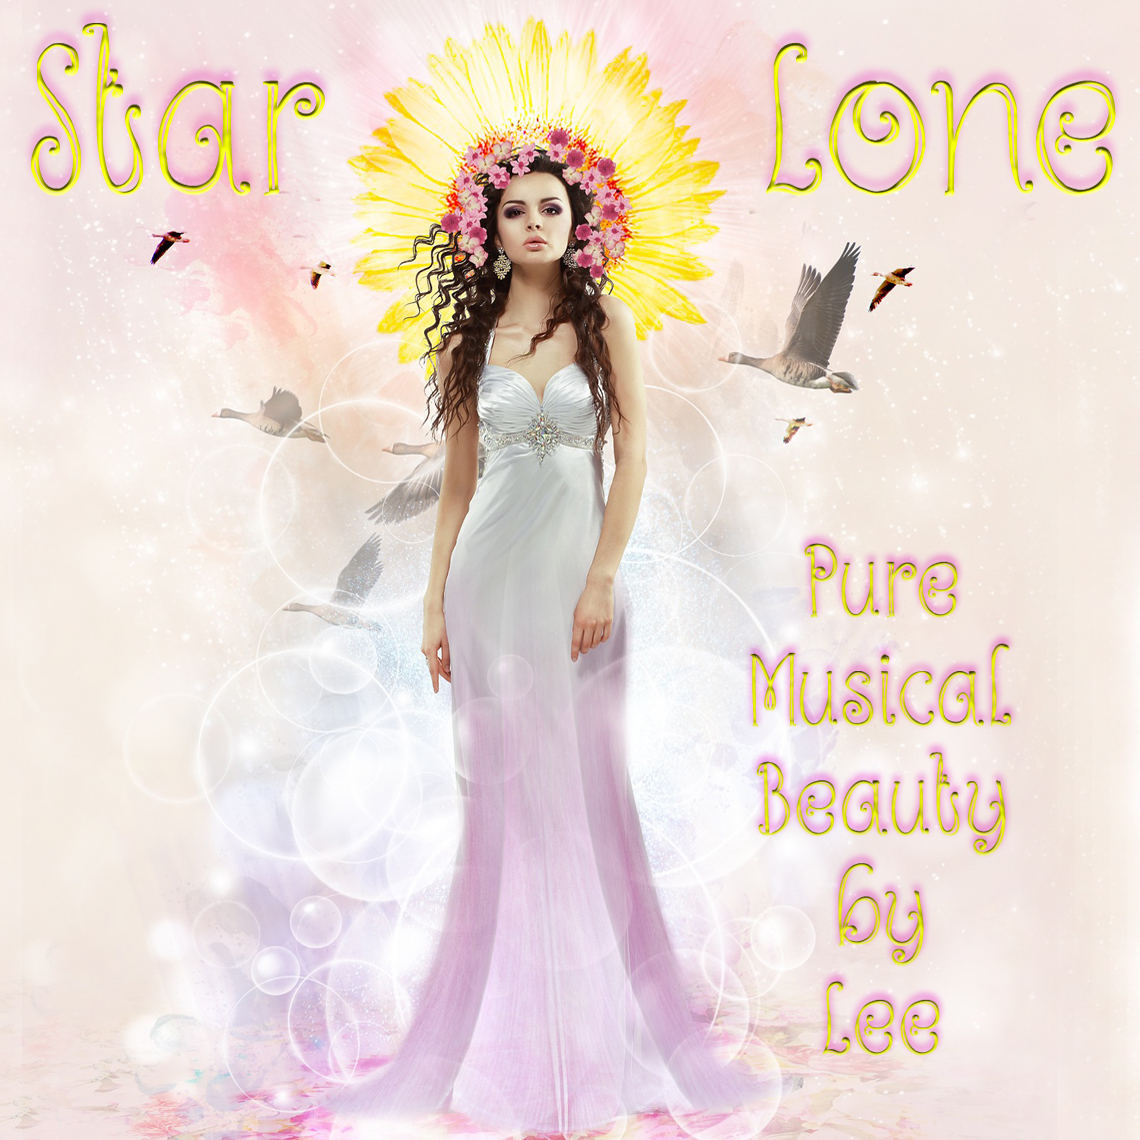 Star Lone